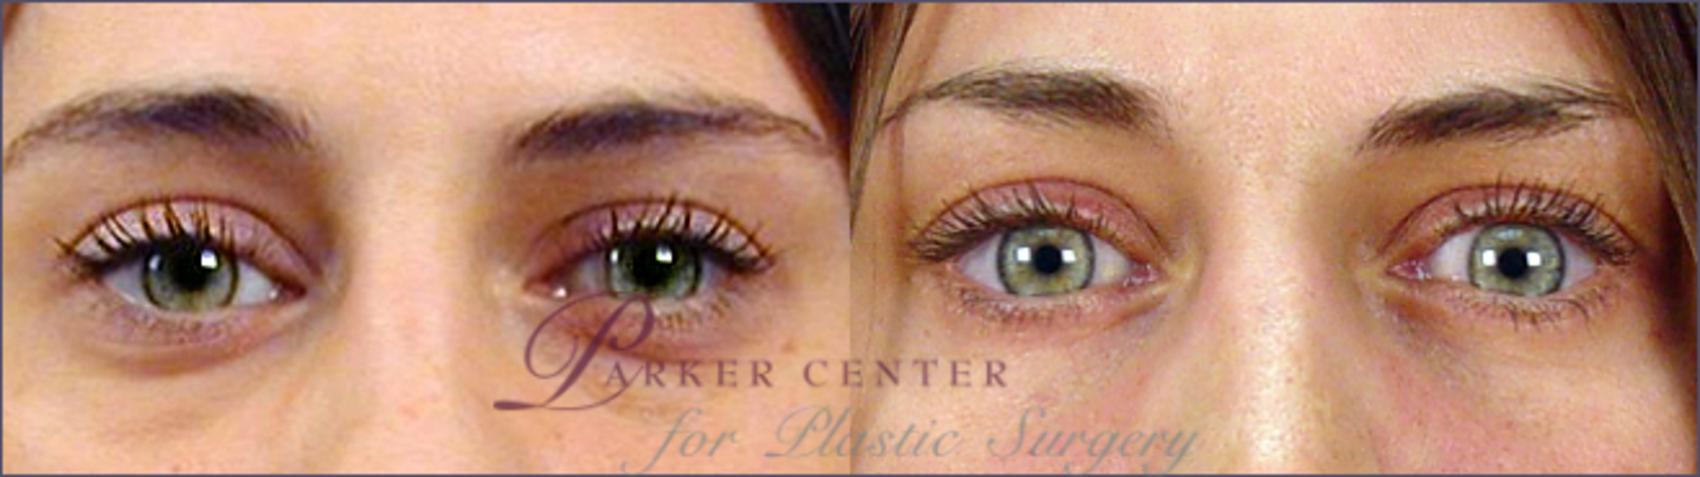 Eyelid Lift Case 54 Before & After View #1 | Paramus, NJ | Parker Center for Plastic Surgery